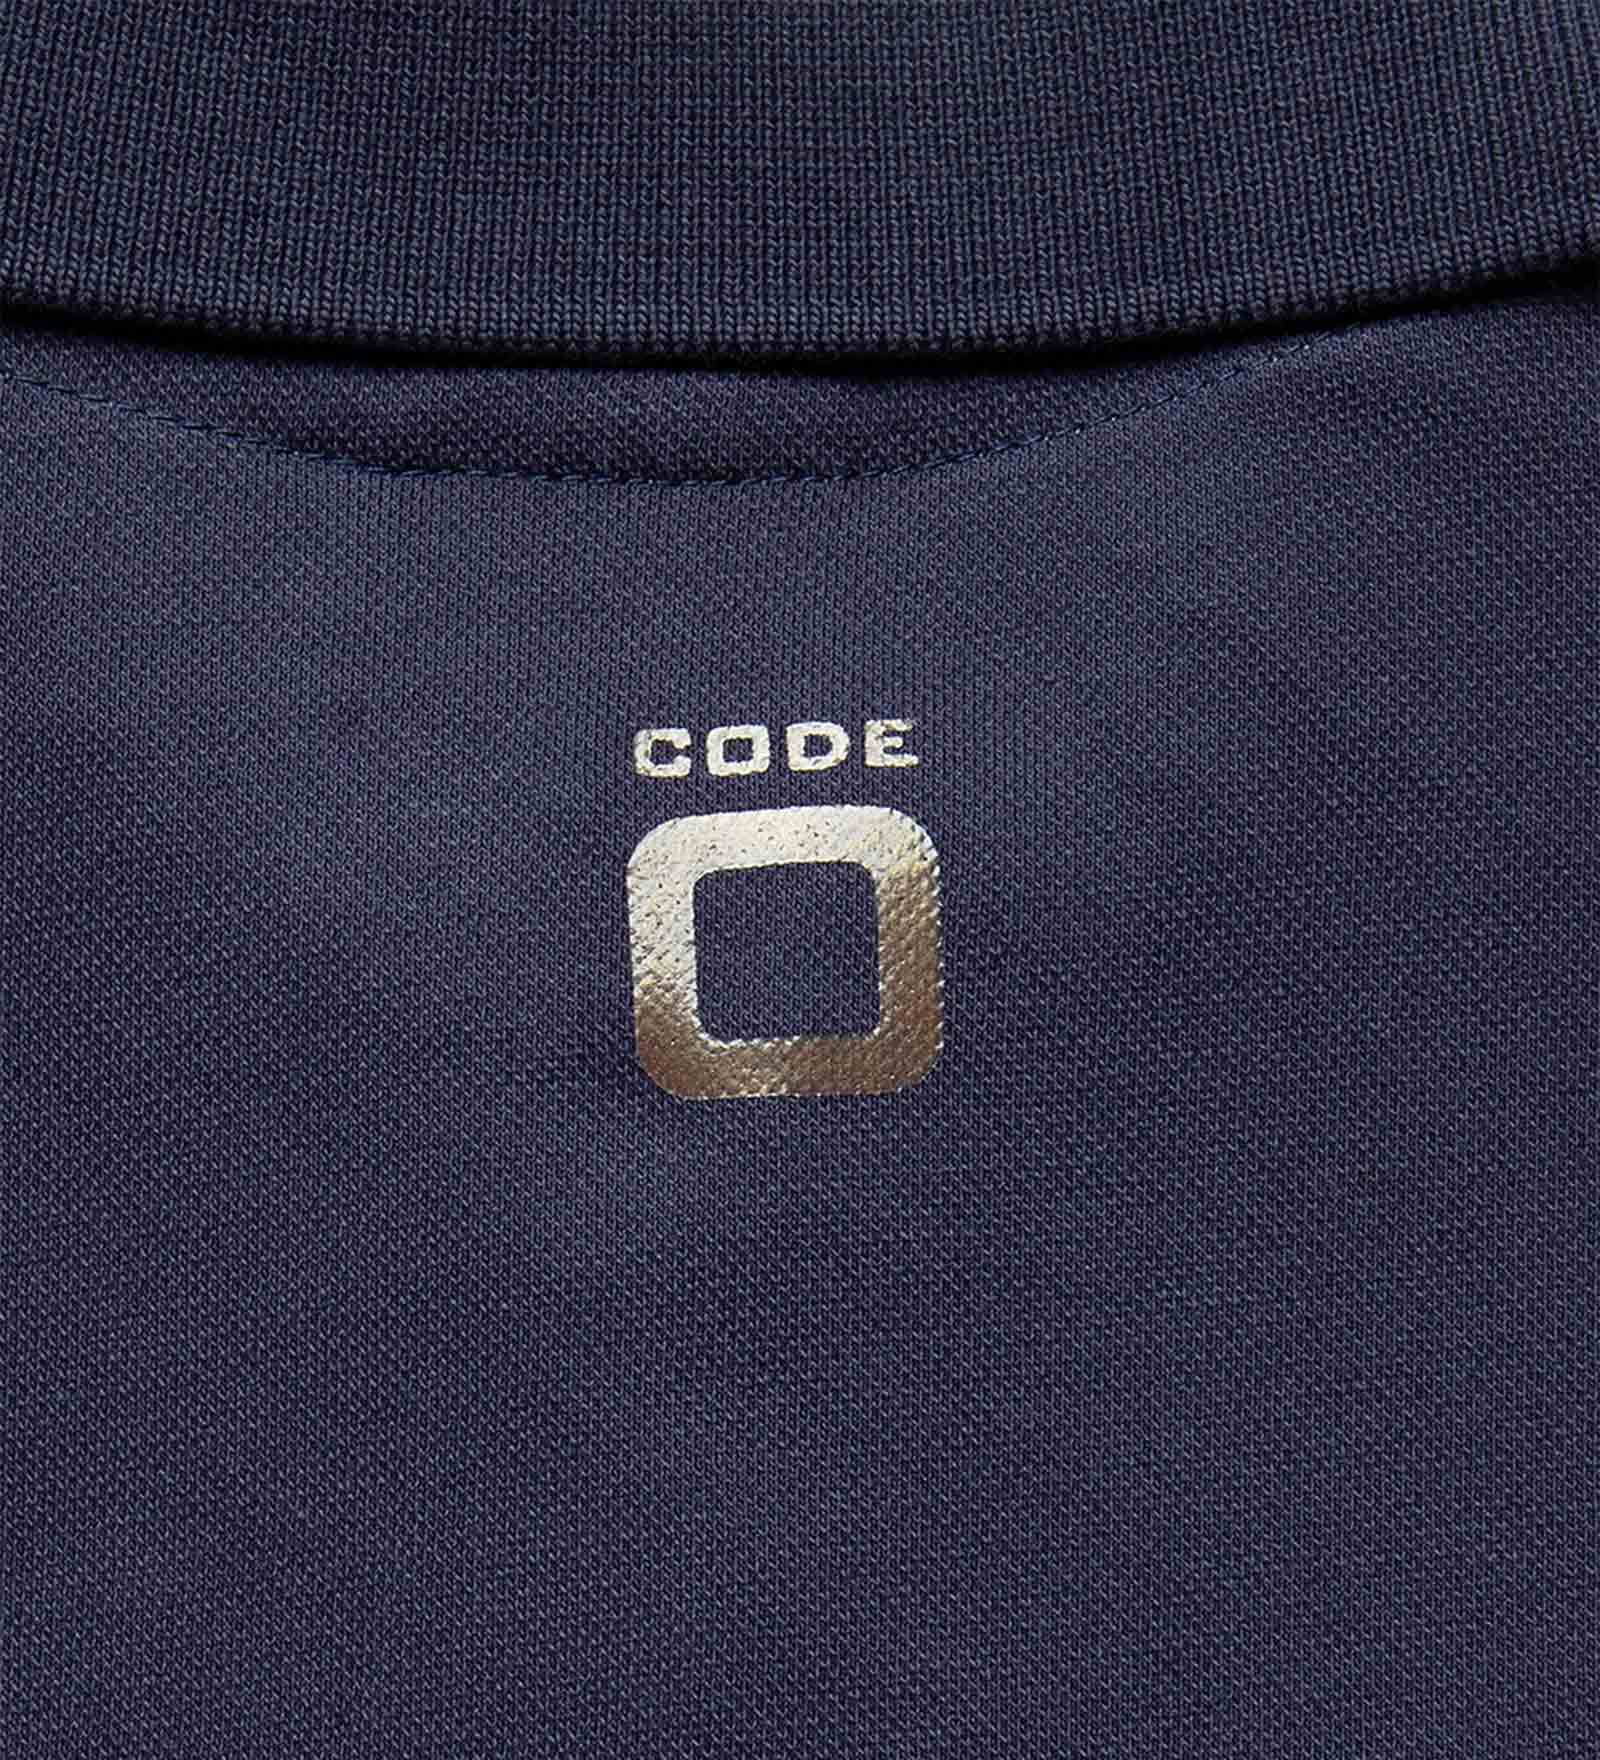 Navy | Performance CODE-ZERO CODE-ZERO Blue Shirt Polo XS Women